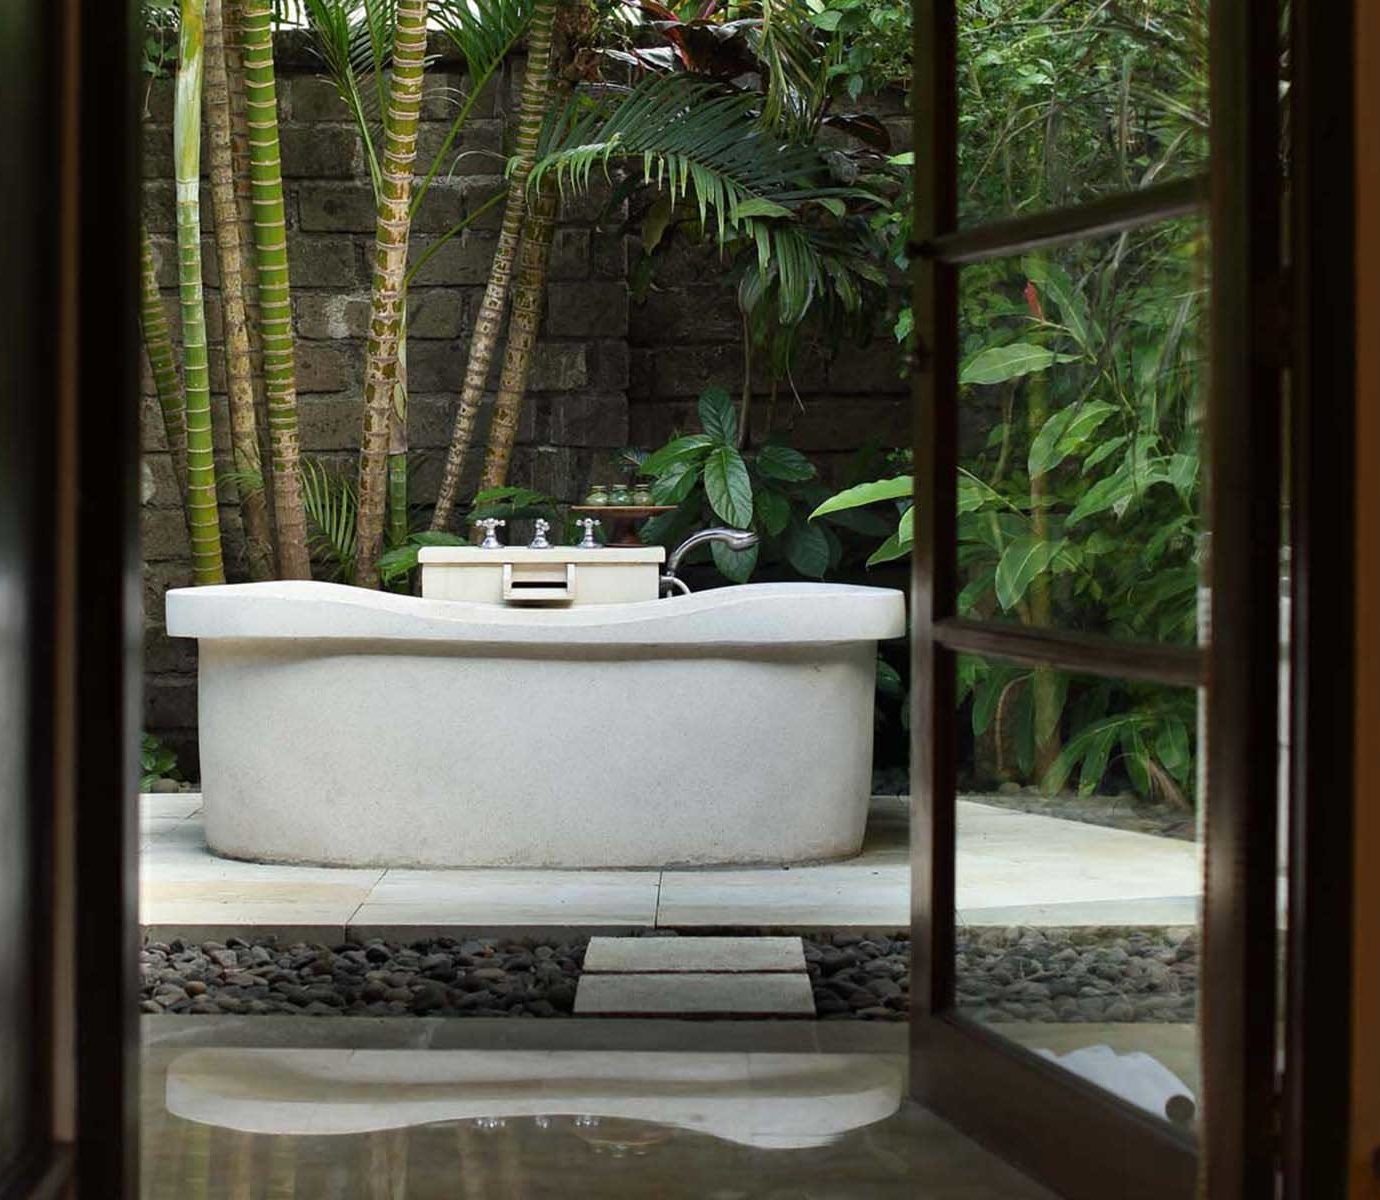 Bath Cultural Eco Elegant Jungle Outdoors Patio Resort house home bathroom swimming pool plumbing fixture plant